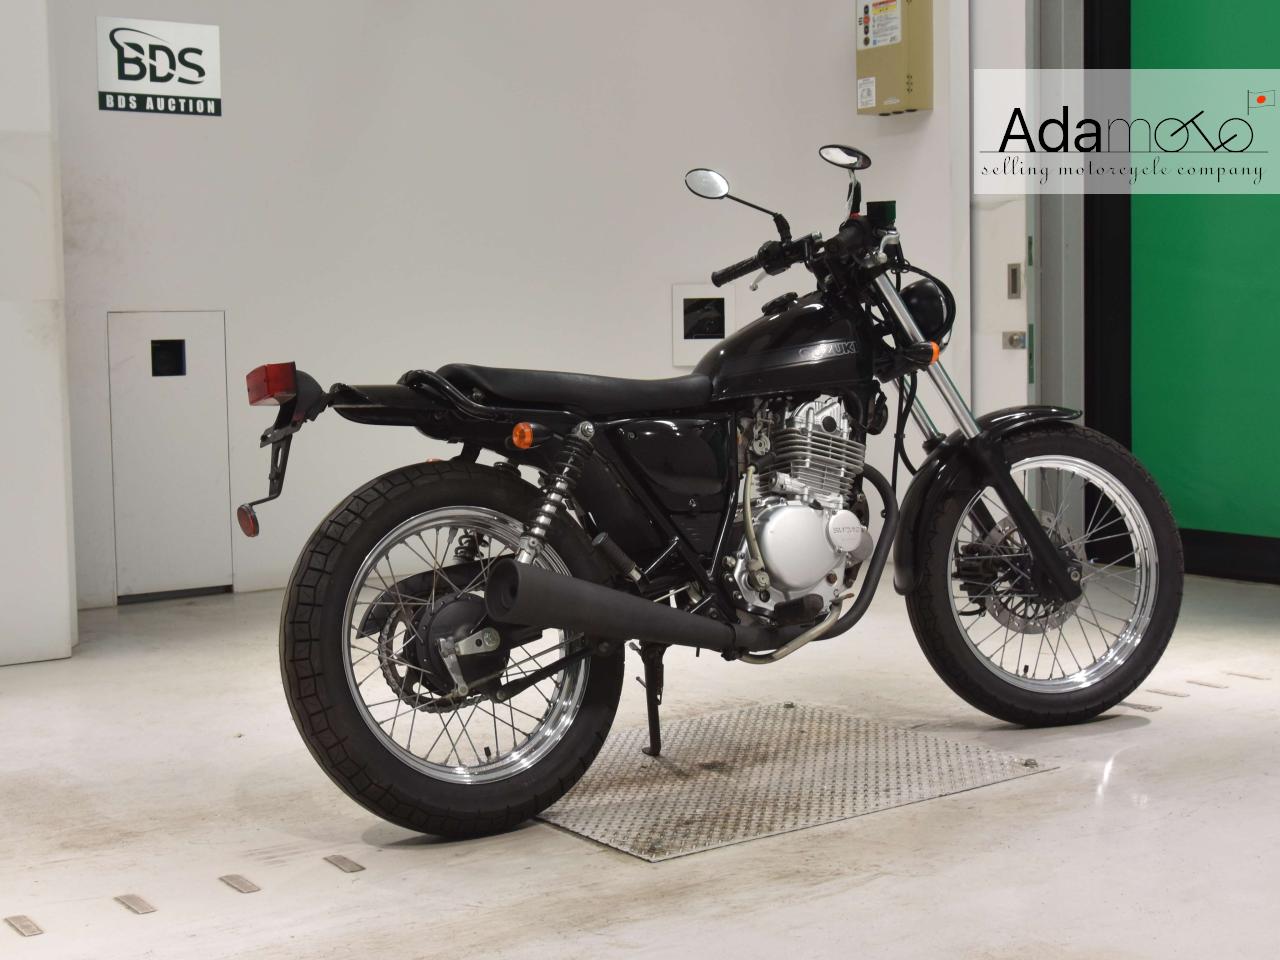 Suzuki GRASSTRACKER BIGBOY - Adamoto - Motorcycles from Japan